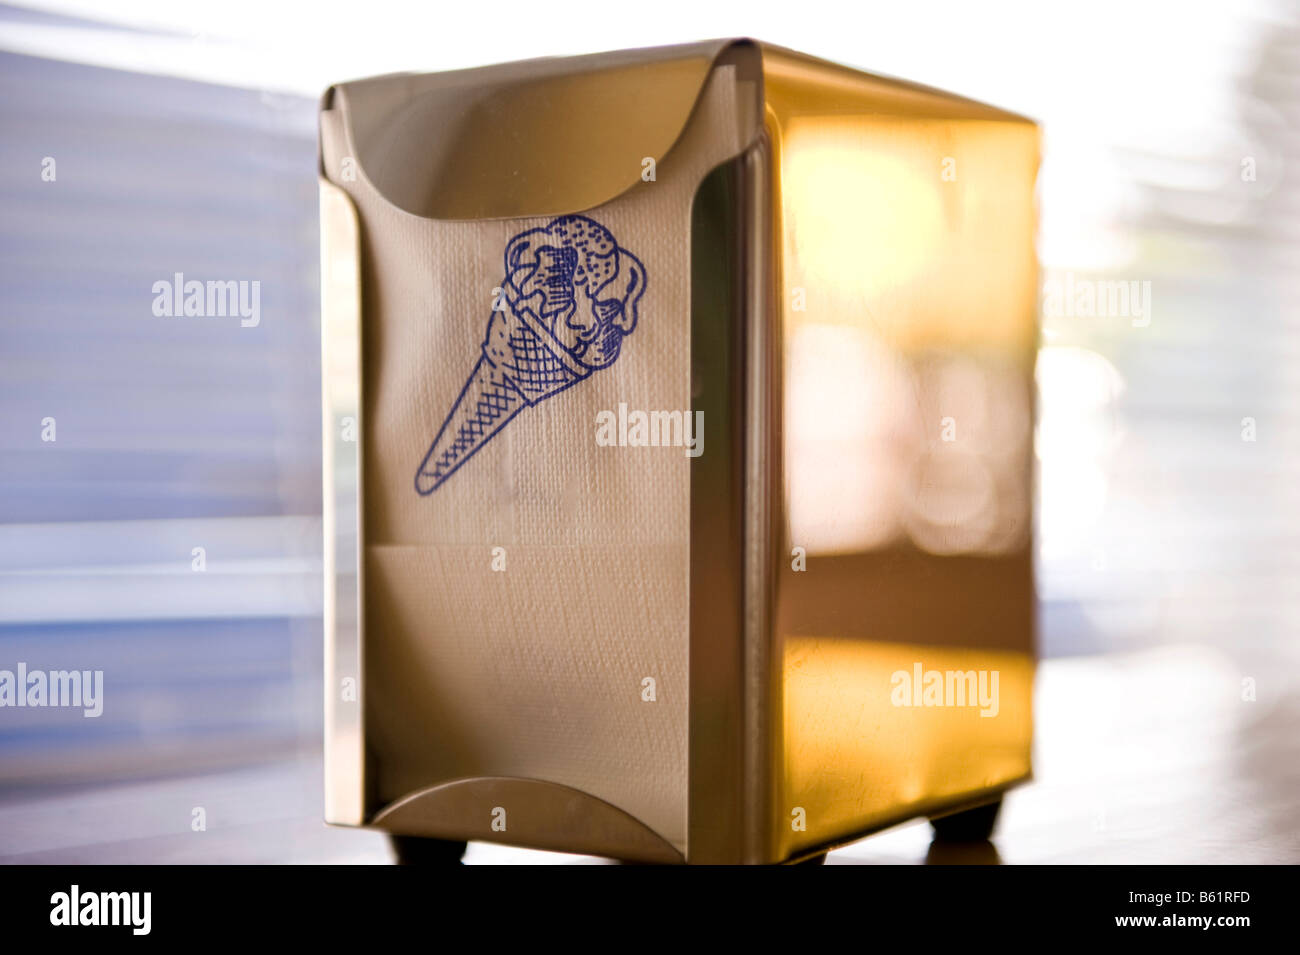 Serviette dispenser with an ice-cream motif Stock Photo